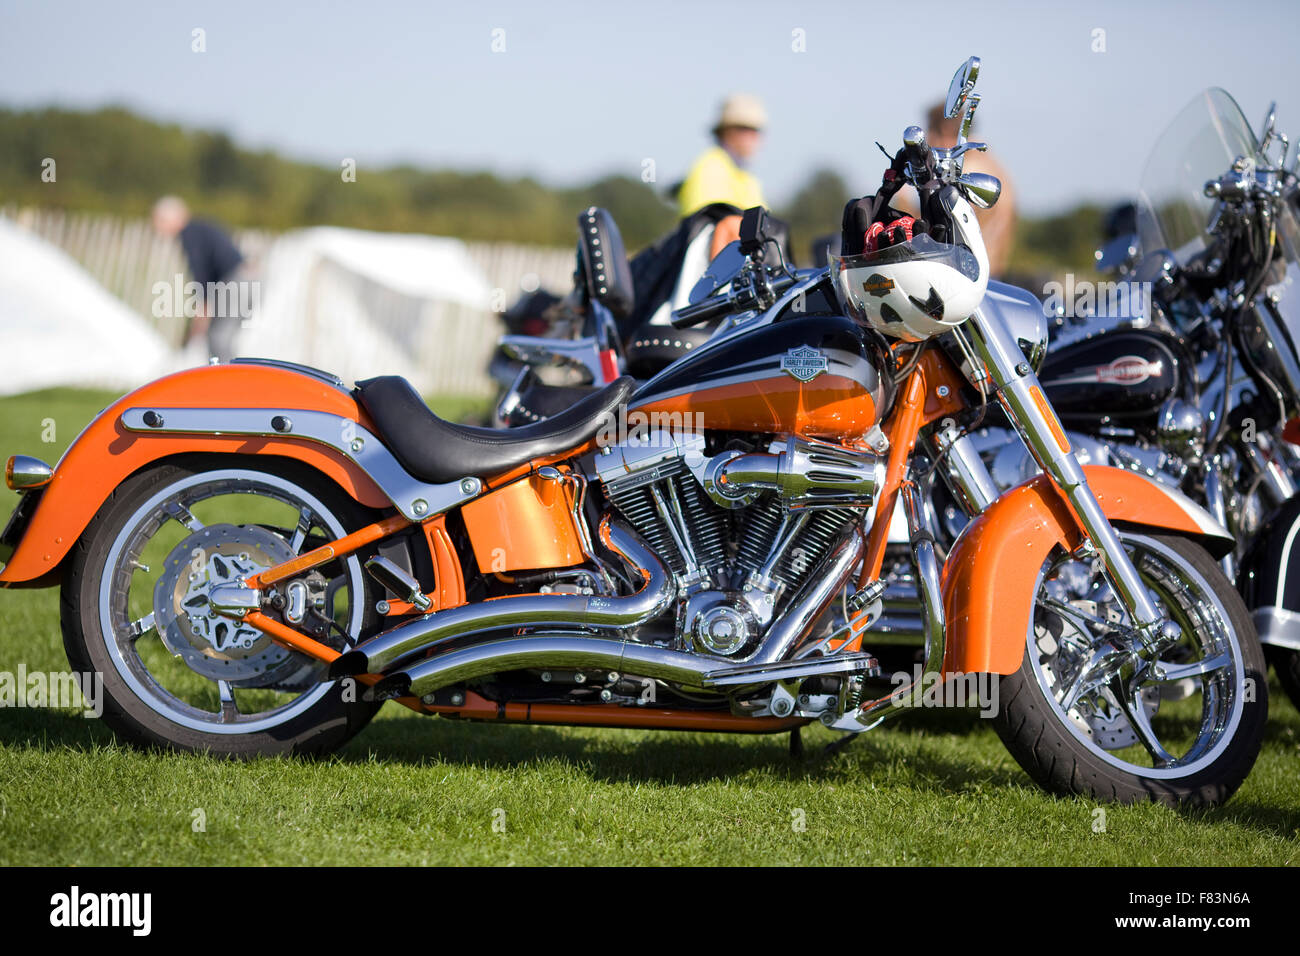 Harley Davidson Motorcycle Stock Photo